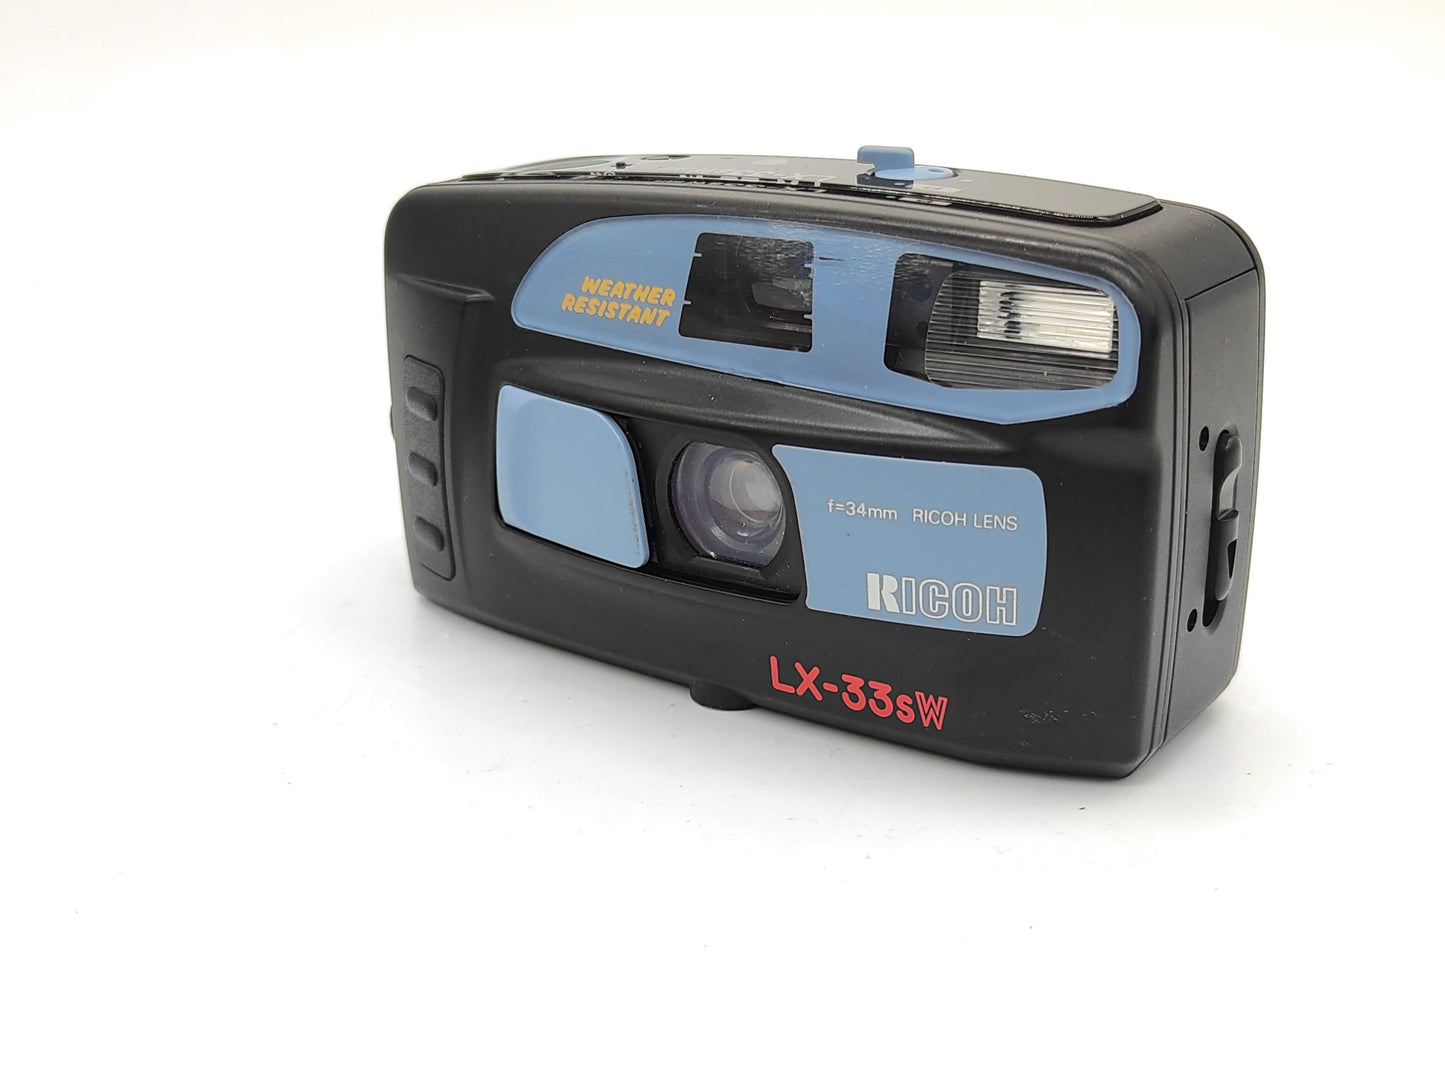 Ricoh LX-33 weatherproof film camera